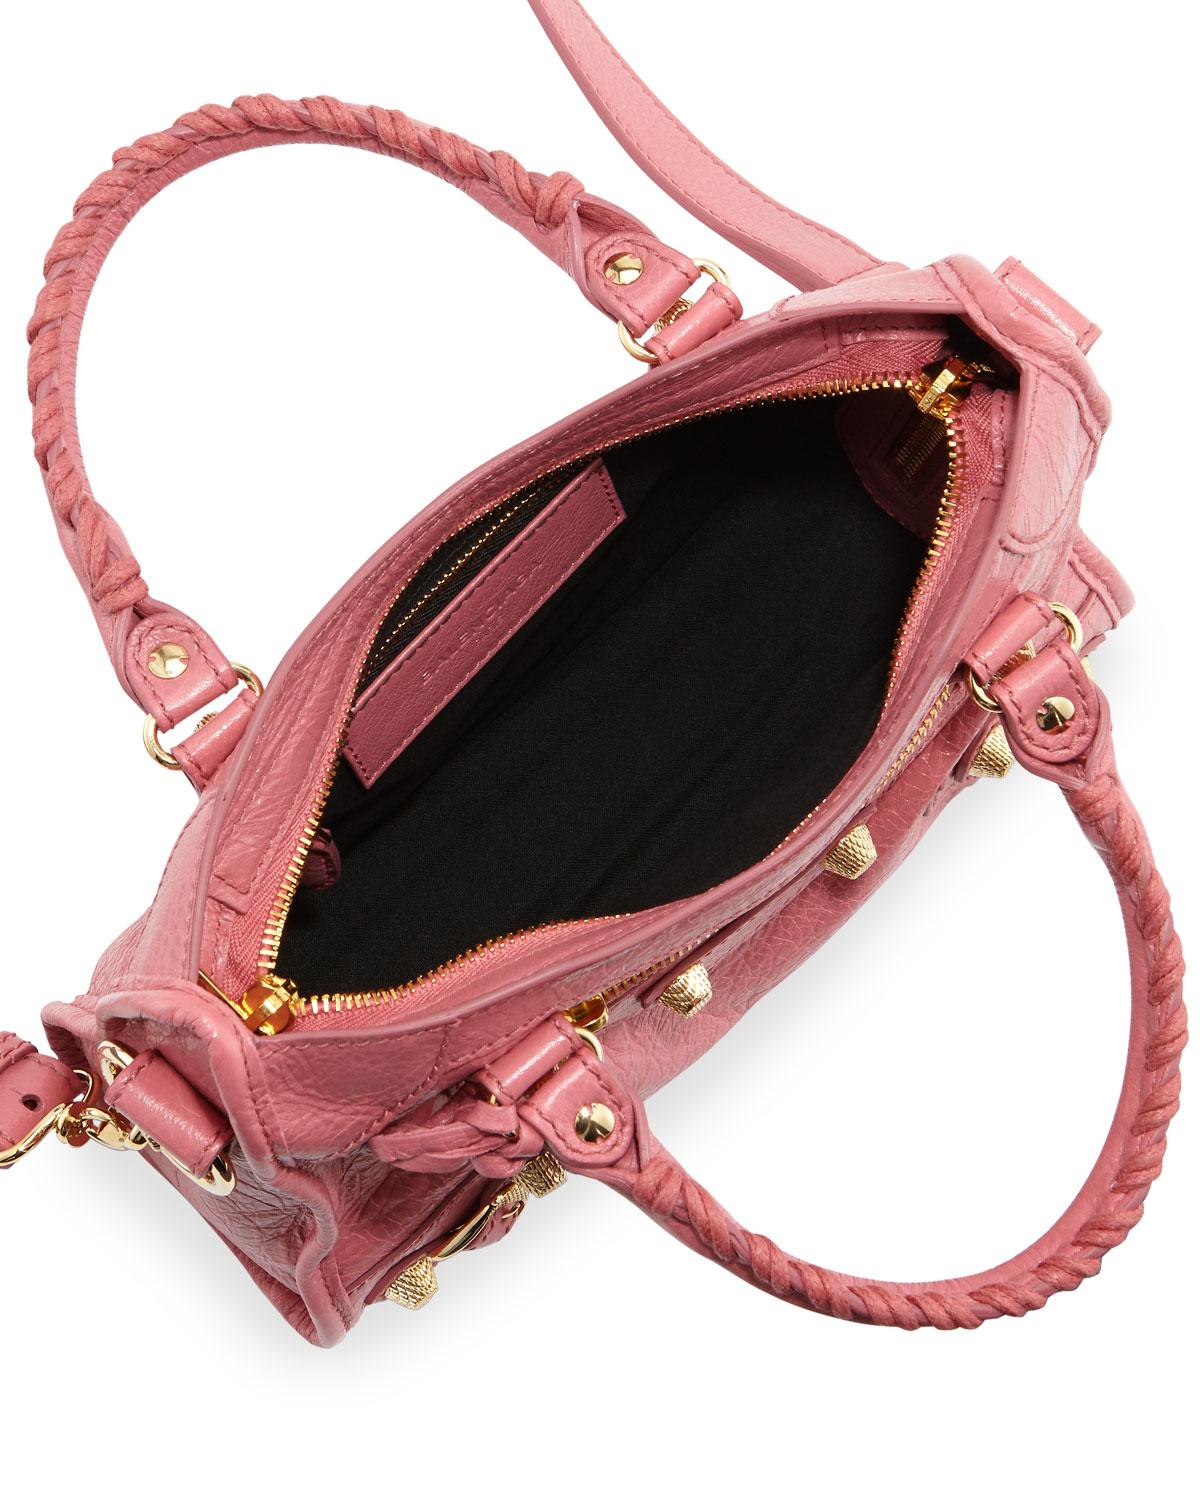 Balenciaga Leather Giant 12 Mini City Aj Bag in Rose (Pink) - Lyst